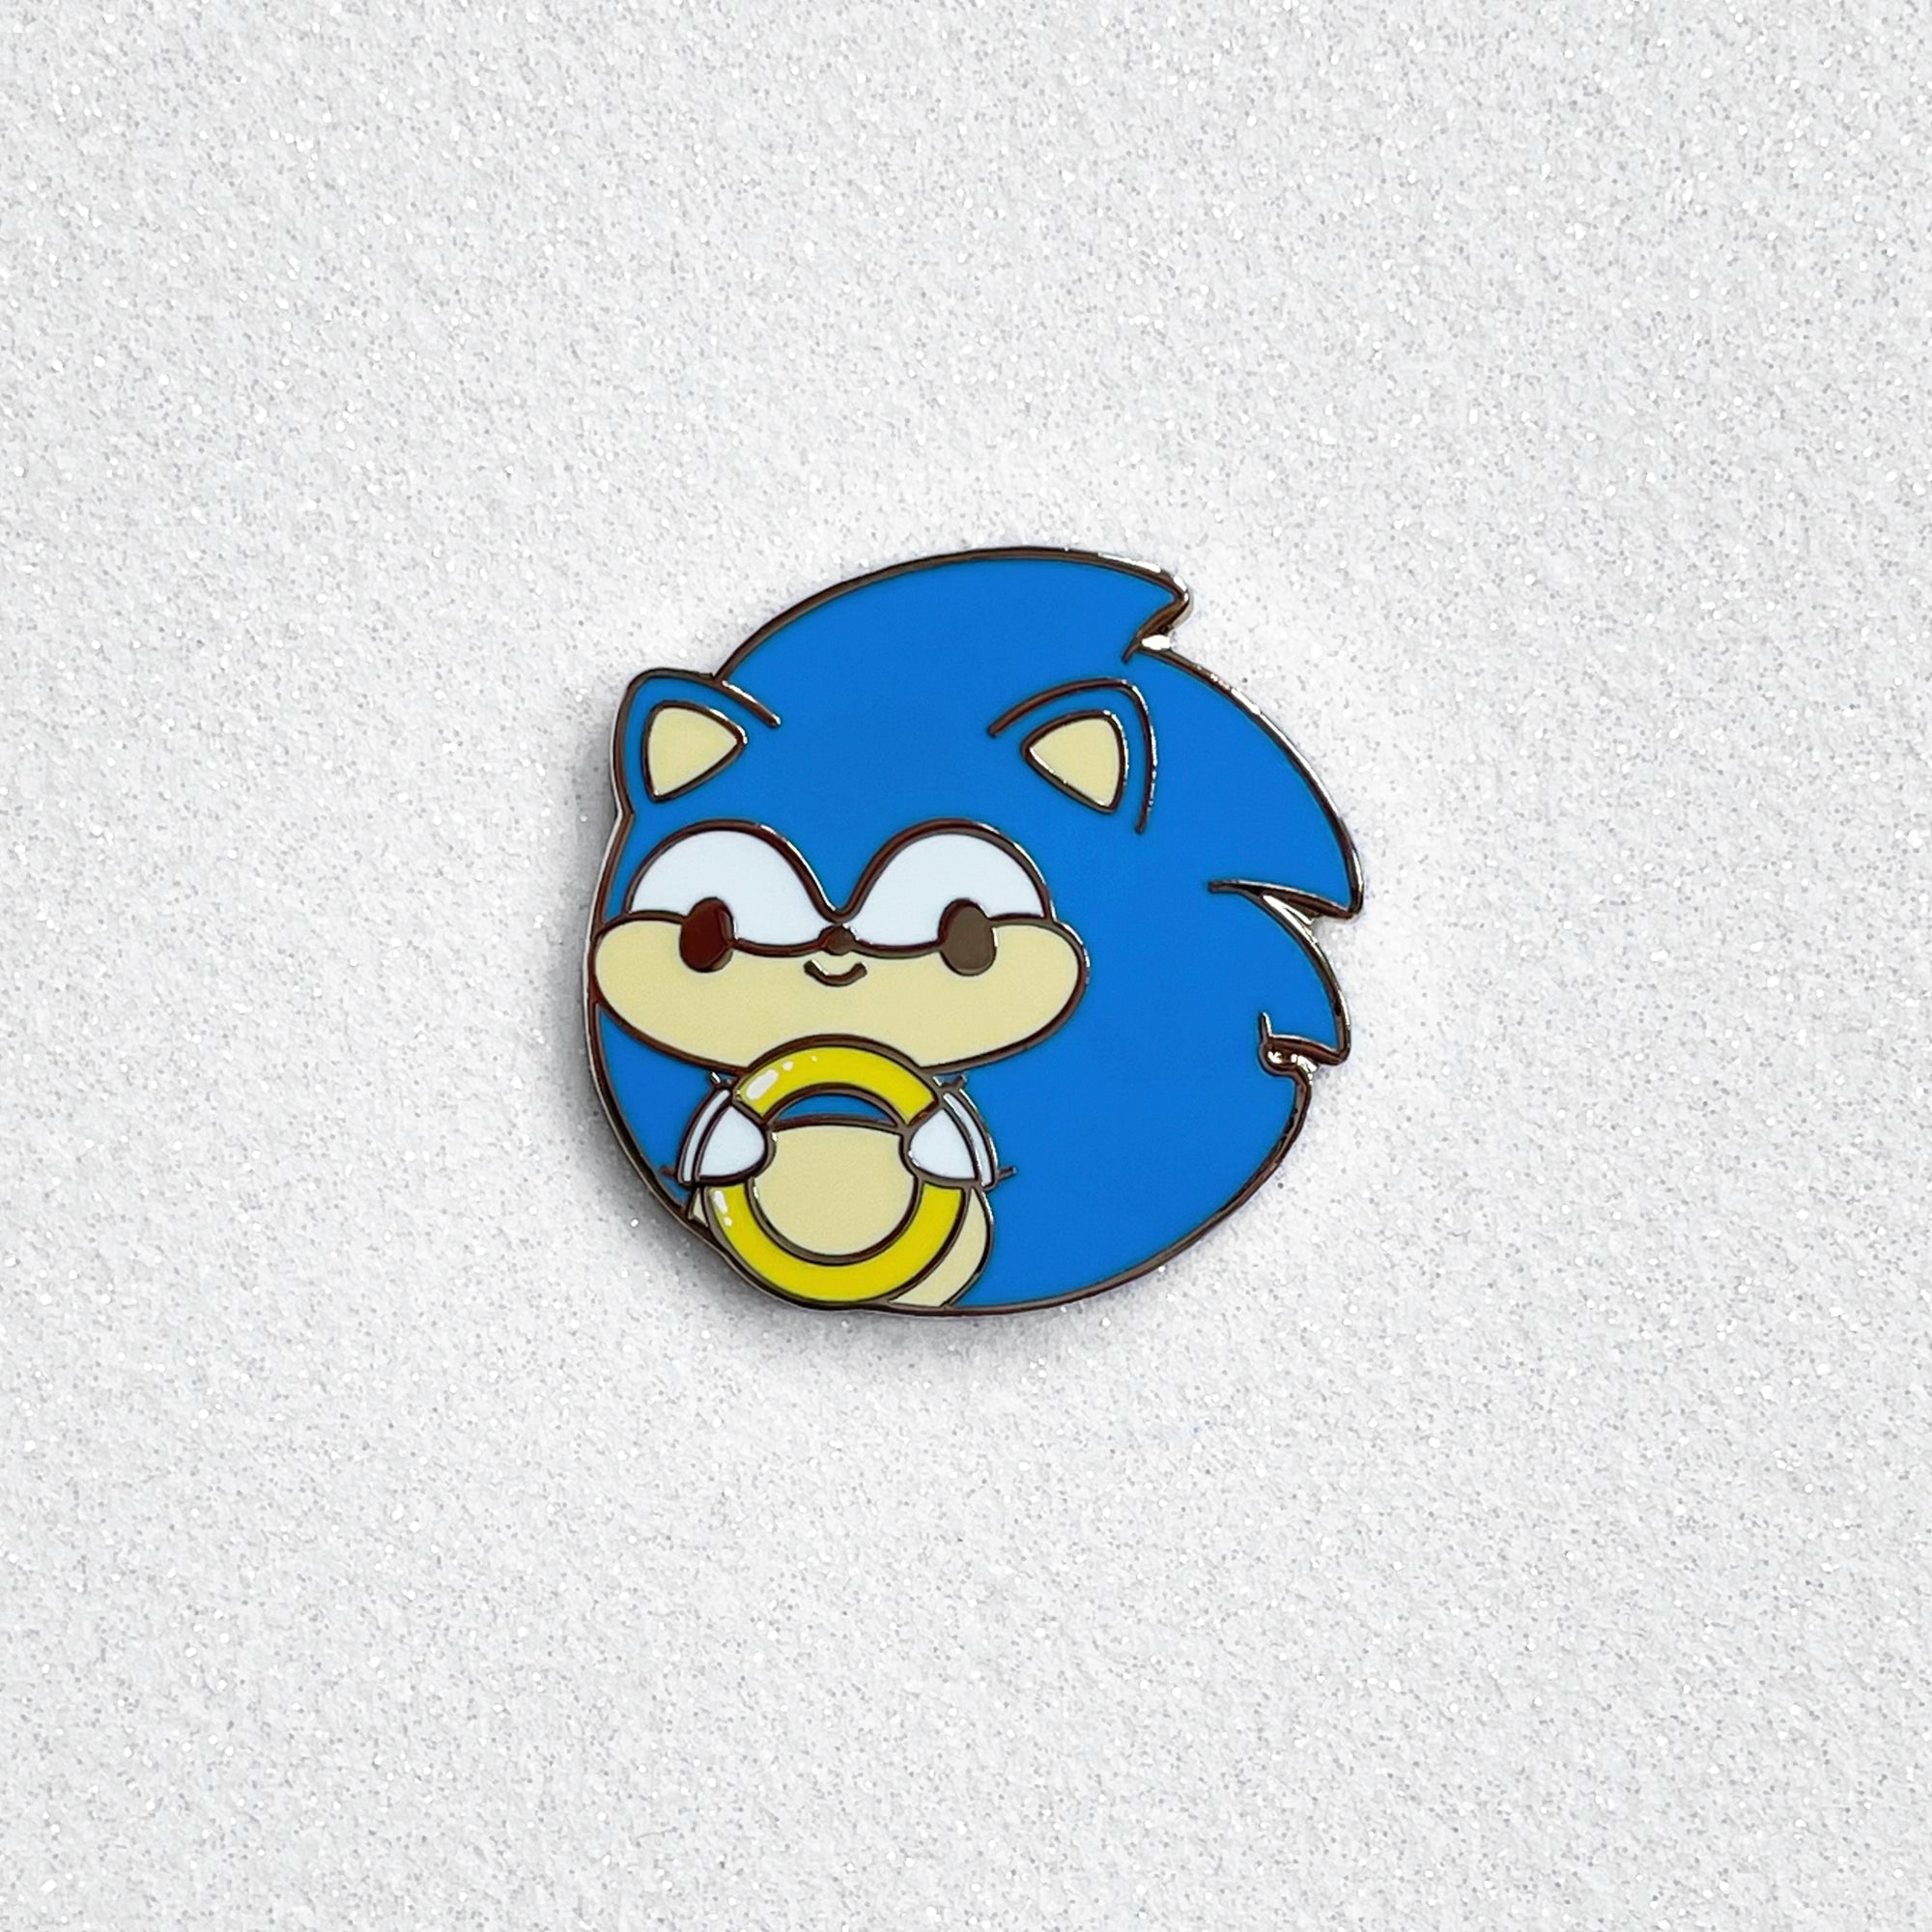 Sonic Colors Ultimate Sonic the Hedgehog & Wisps 2.5 Enamel Pin